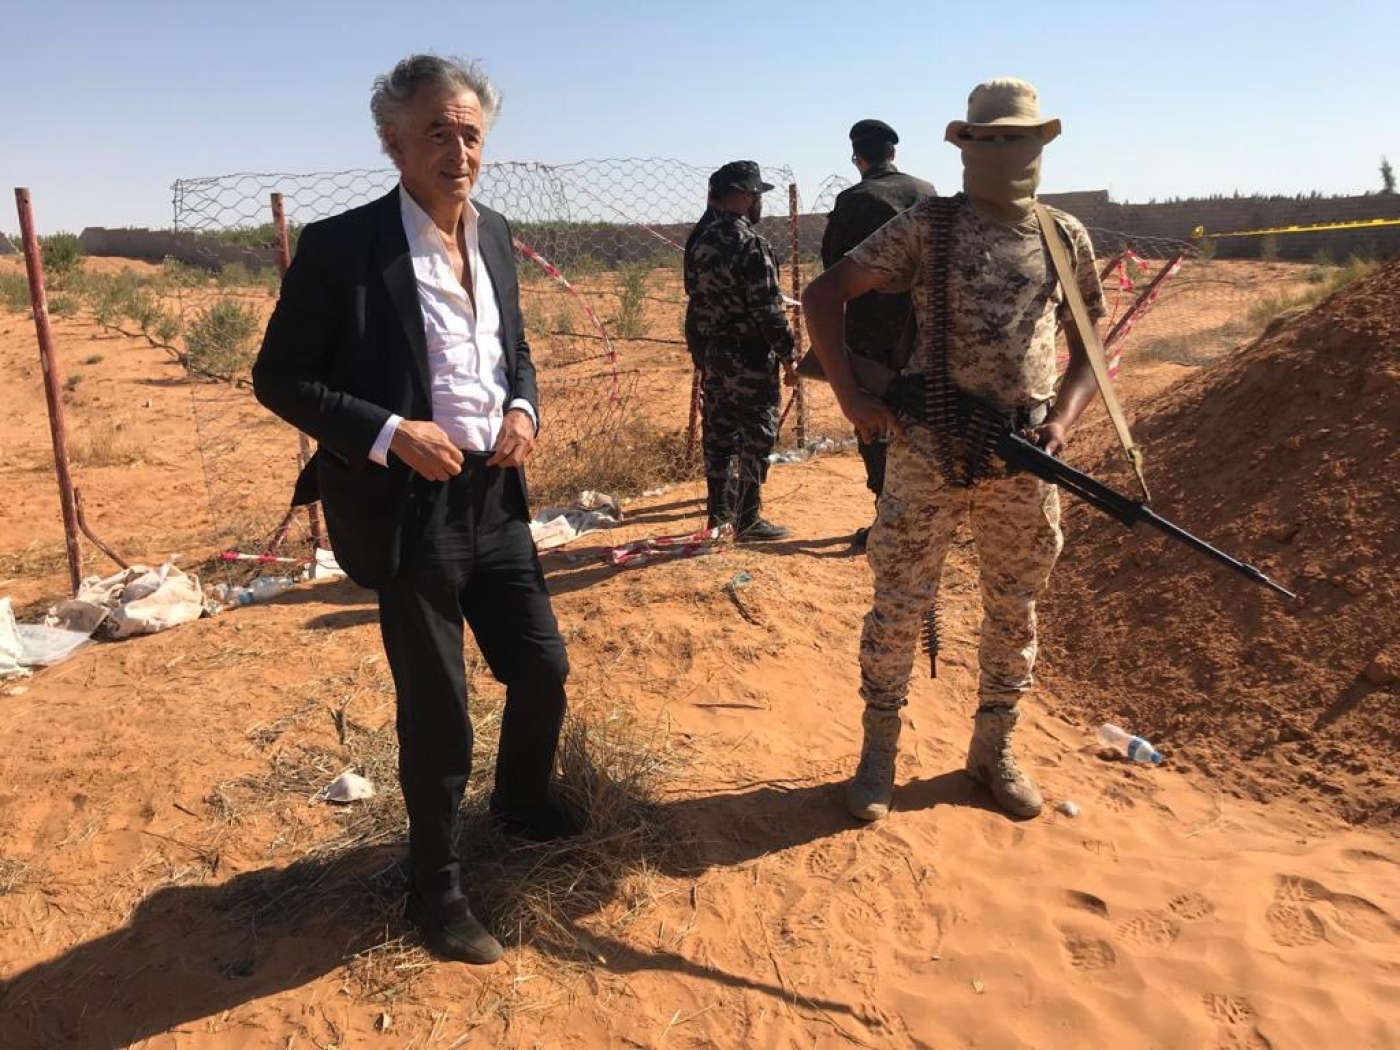 Uproar in Libya as French writer Bernard-Henri Levy visits | Middle East Eye